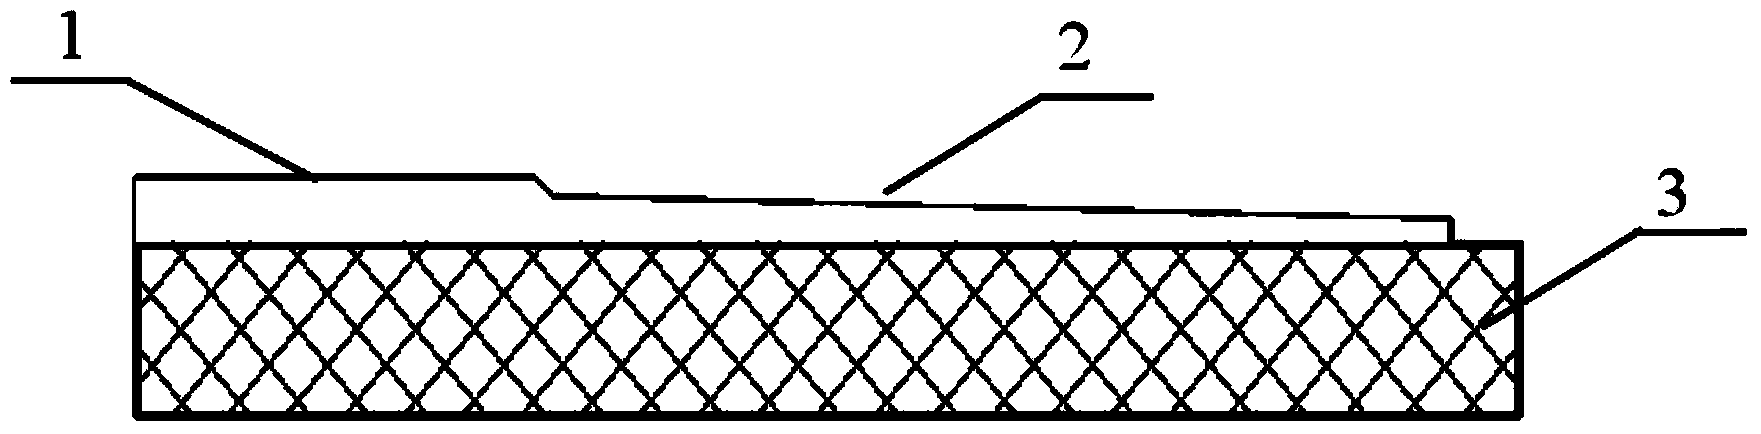 Trapezoidal evaporation metalizing polypropylene film capacitor